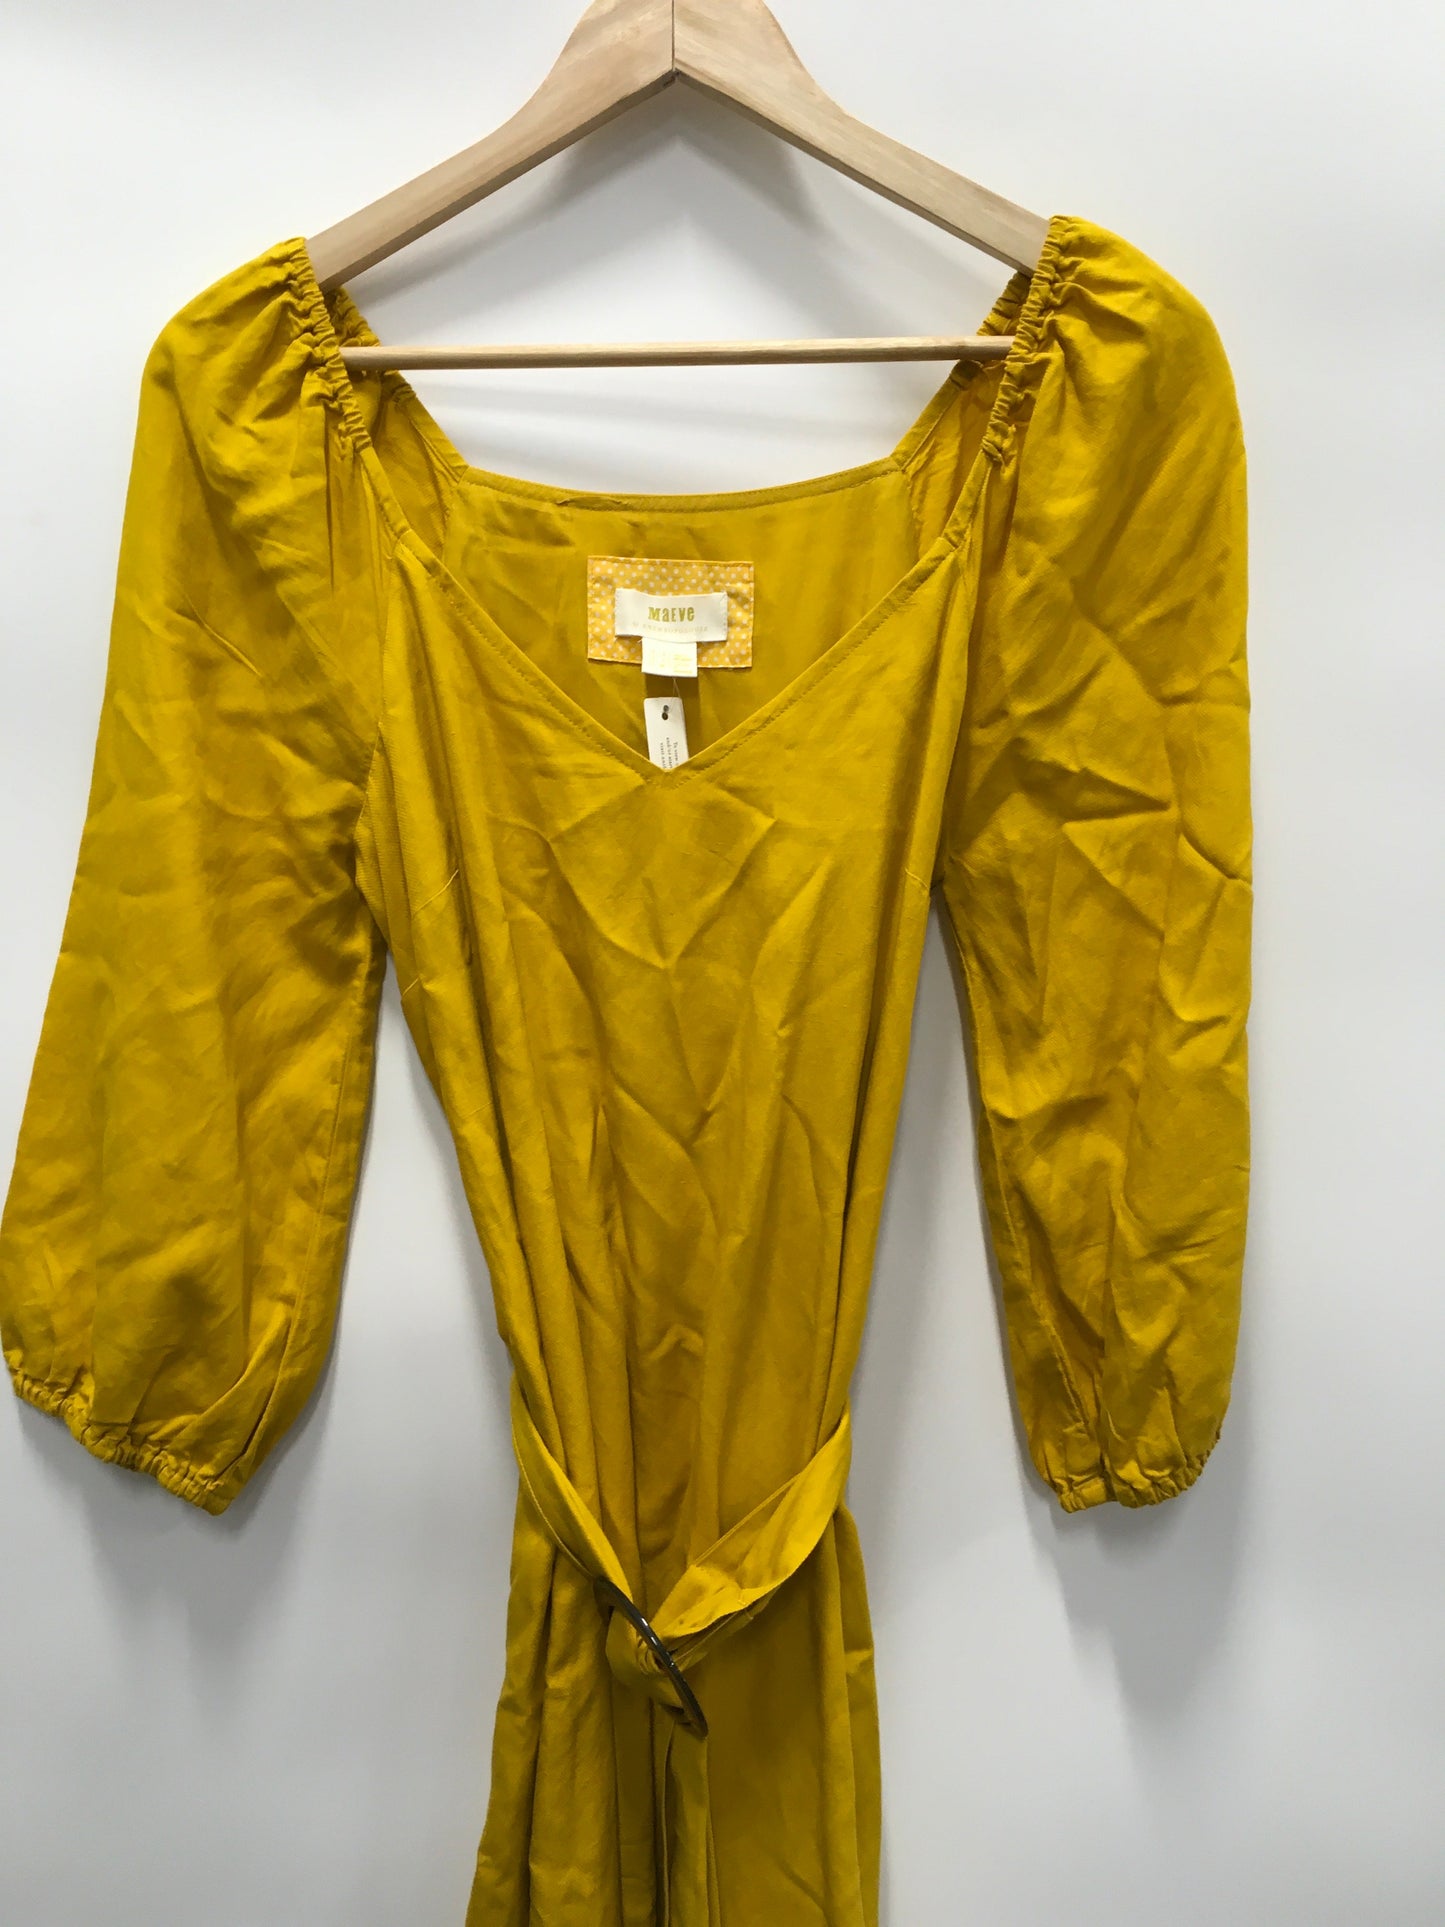 Yellow Dress Casual Midi Maeve, Size 4